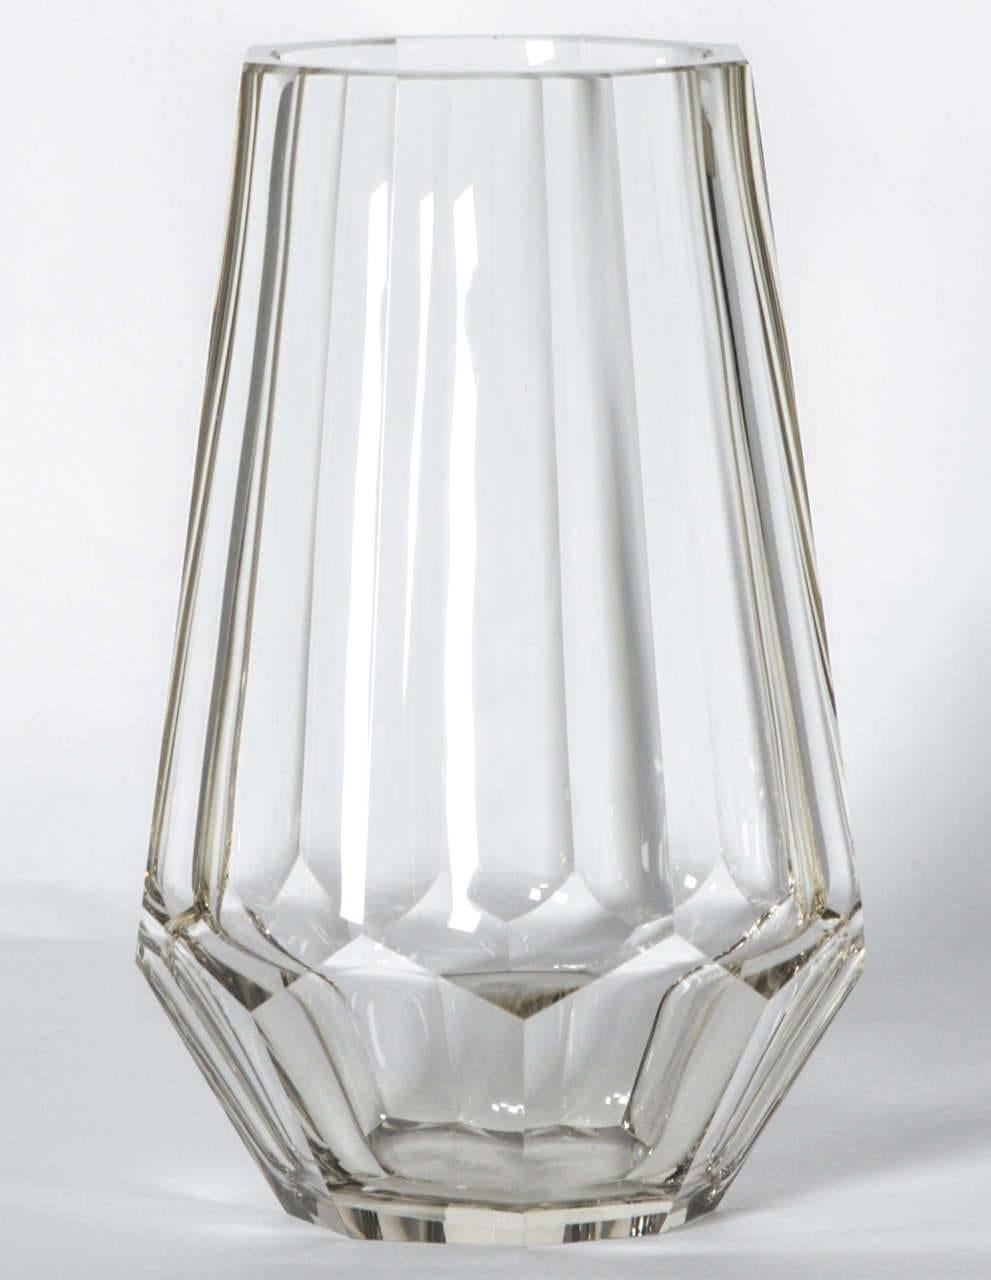 Josef Hoffmann cut and ground clear crystal vase made by Ludwig Moser & Söhne, Karlsbad for Wiener Werkstätte circa 1915 - 1920. Stamp signature to underside: [MOSER KARLSBAD WW CZECHOSLOVAKIA].

Image 7: Josef Hoffmann (Austrian, 1870–1956)